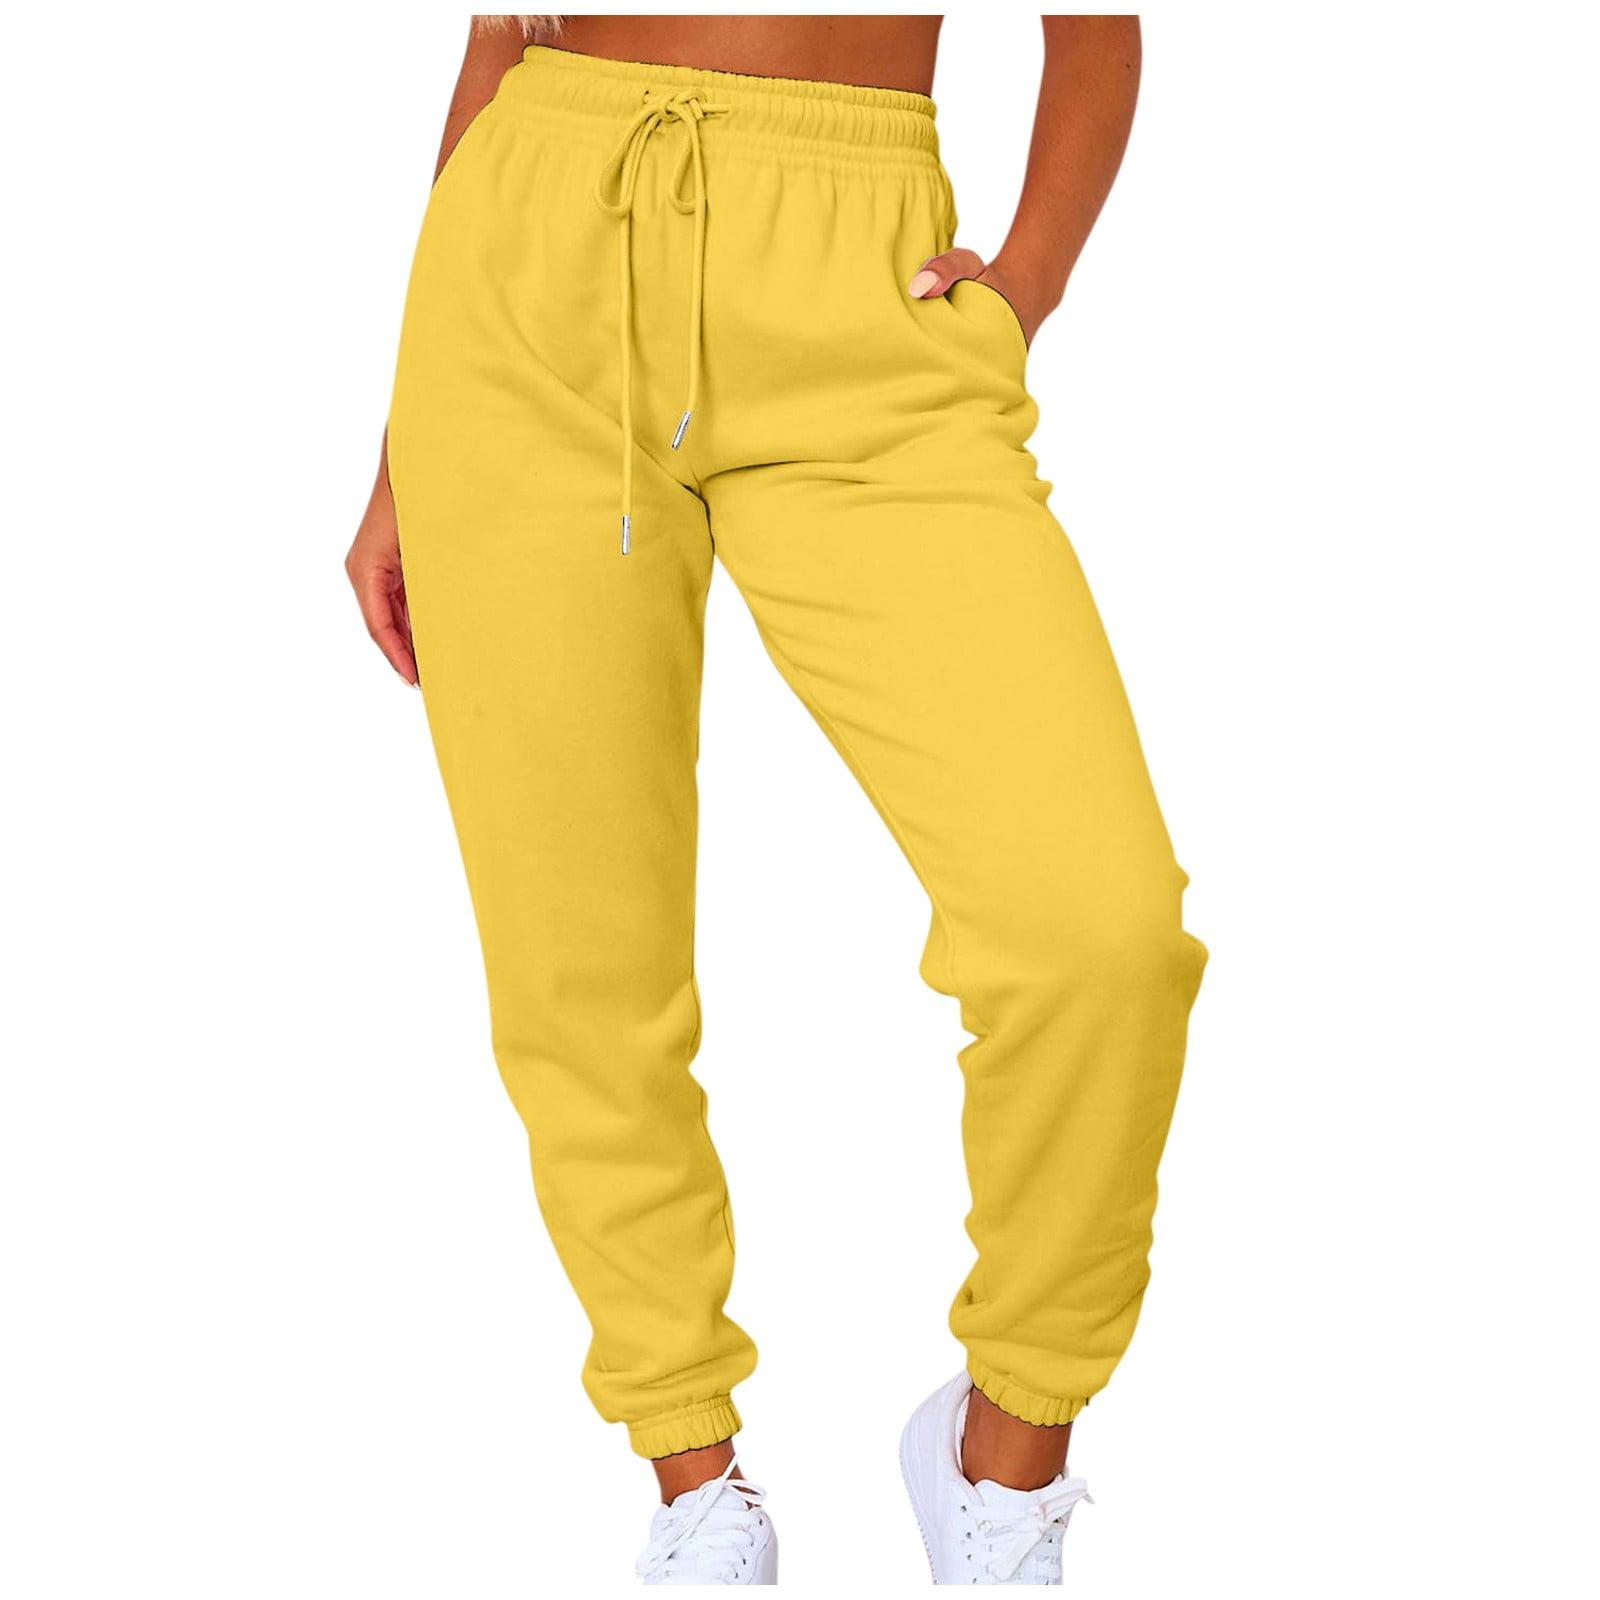 UoCefik Gray Sweatpants Women Plus Elastic Waist Cinch Bottom Solid ...